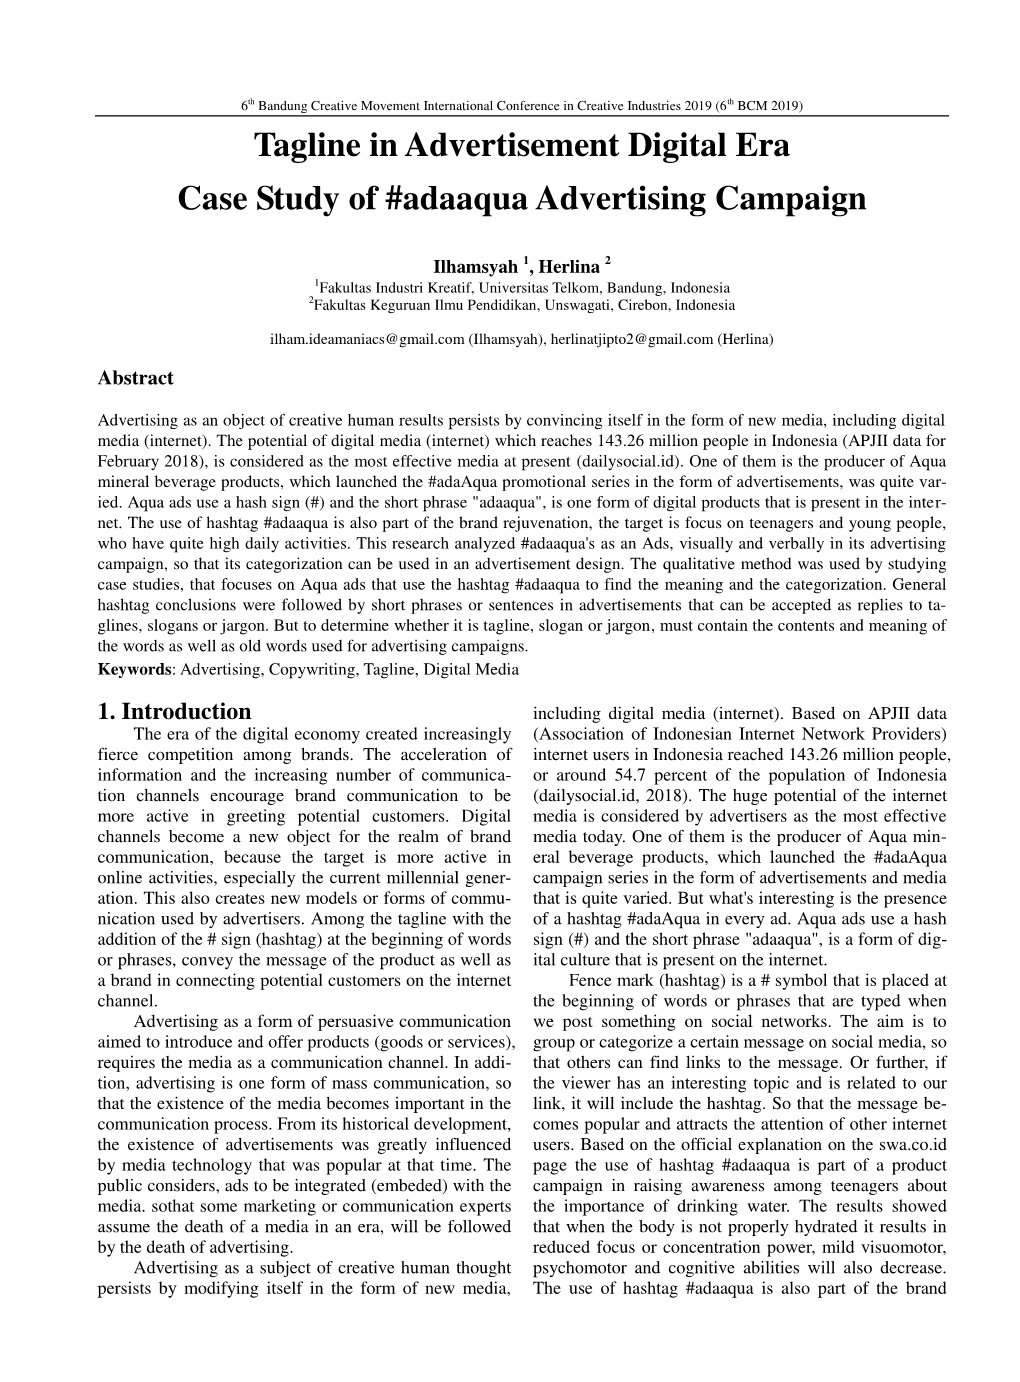 Tagline in Advertisement Digital Era Case Study of #Adaaqua Advertising Campaign